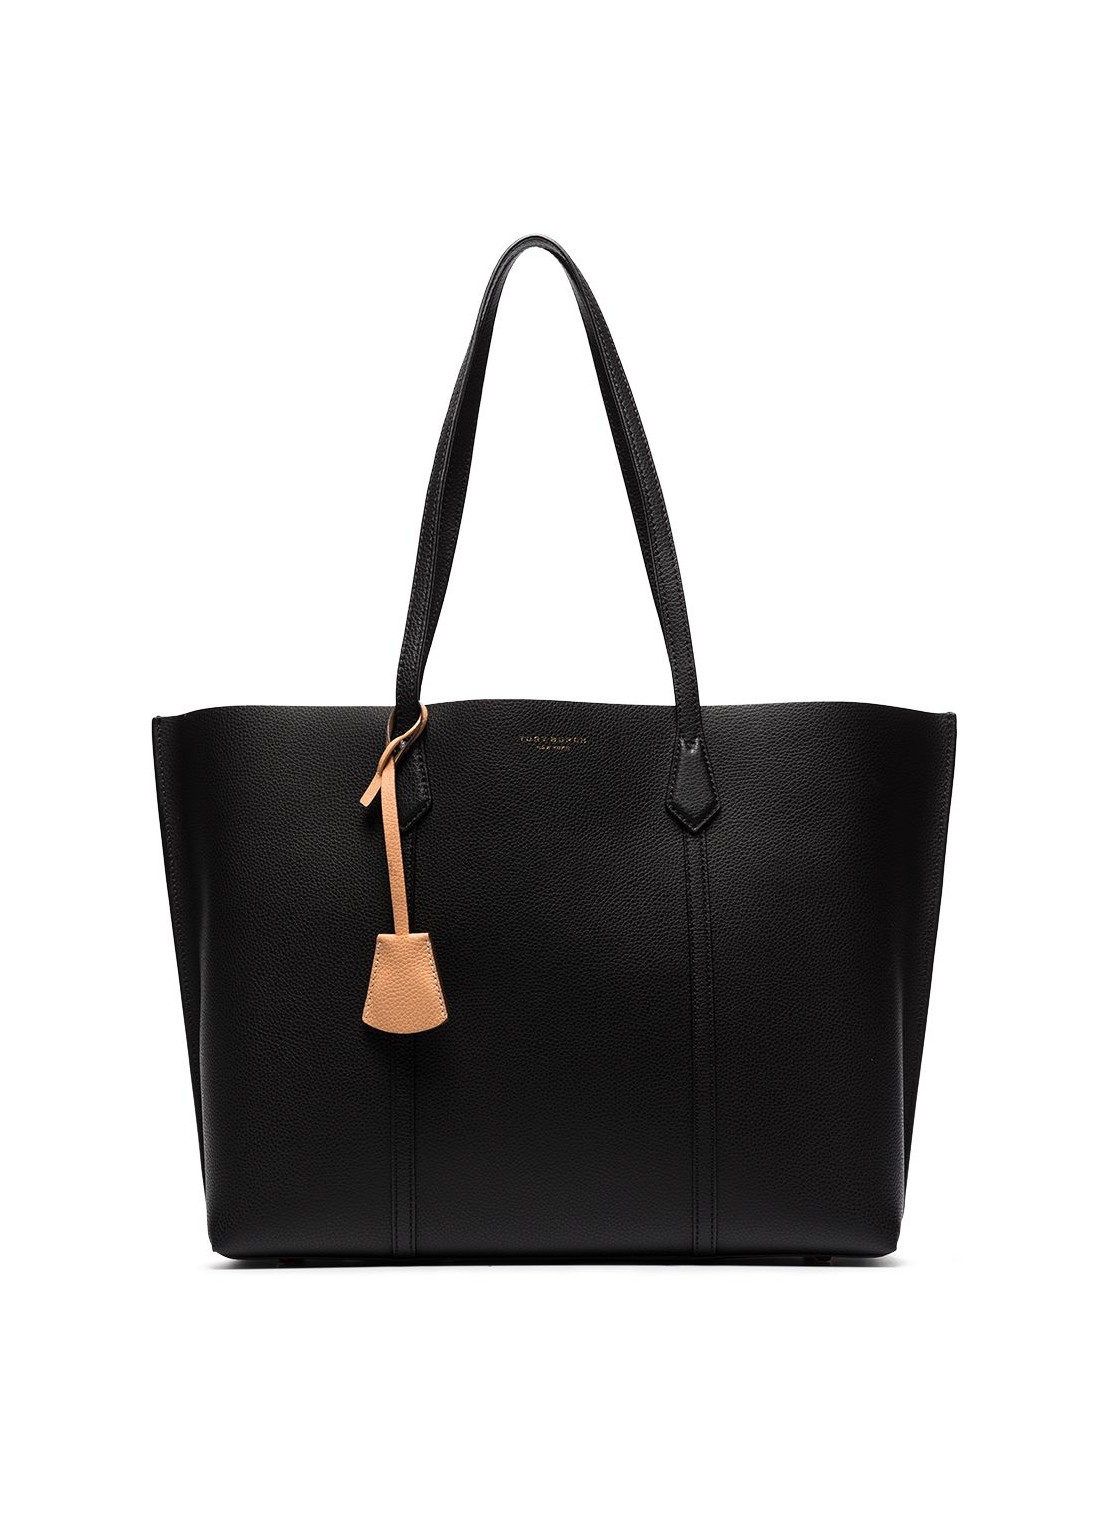 Handbag tory burch handbag woman perry triple-compartment tote 81932001 001 talla T/U
 